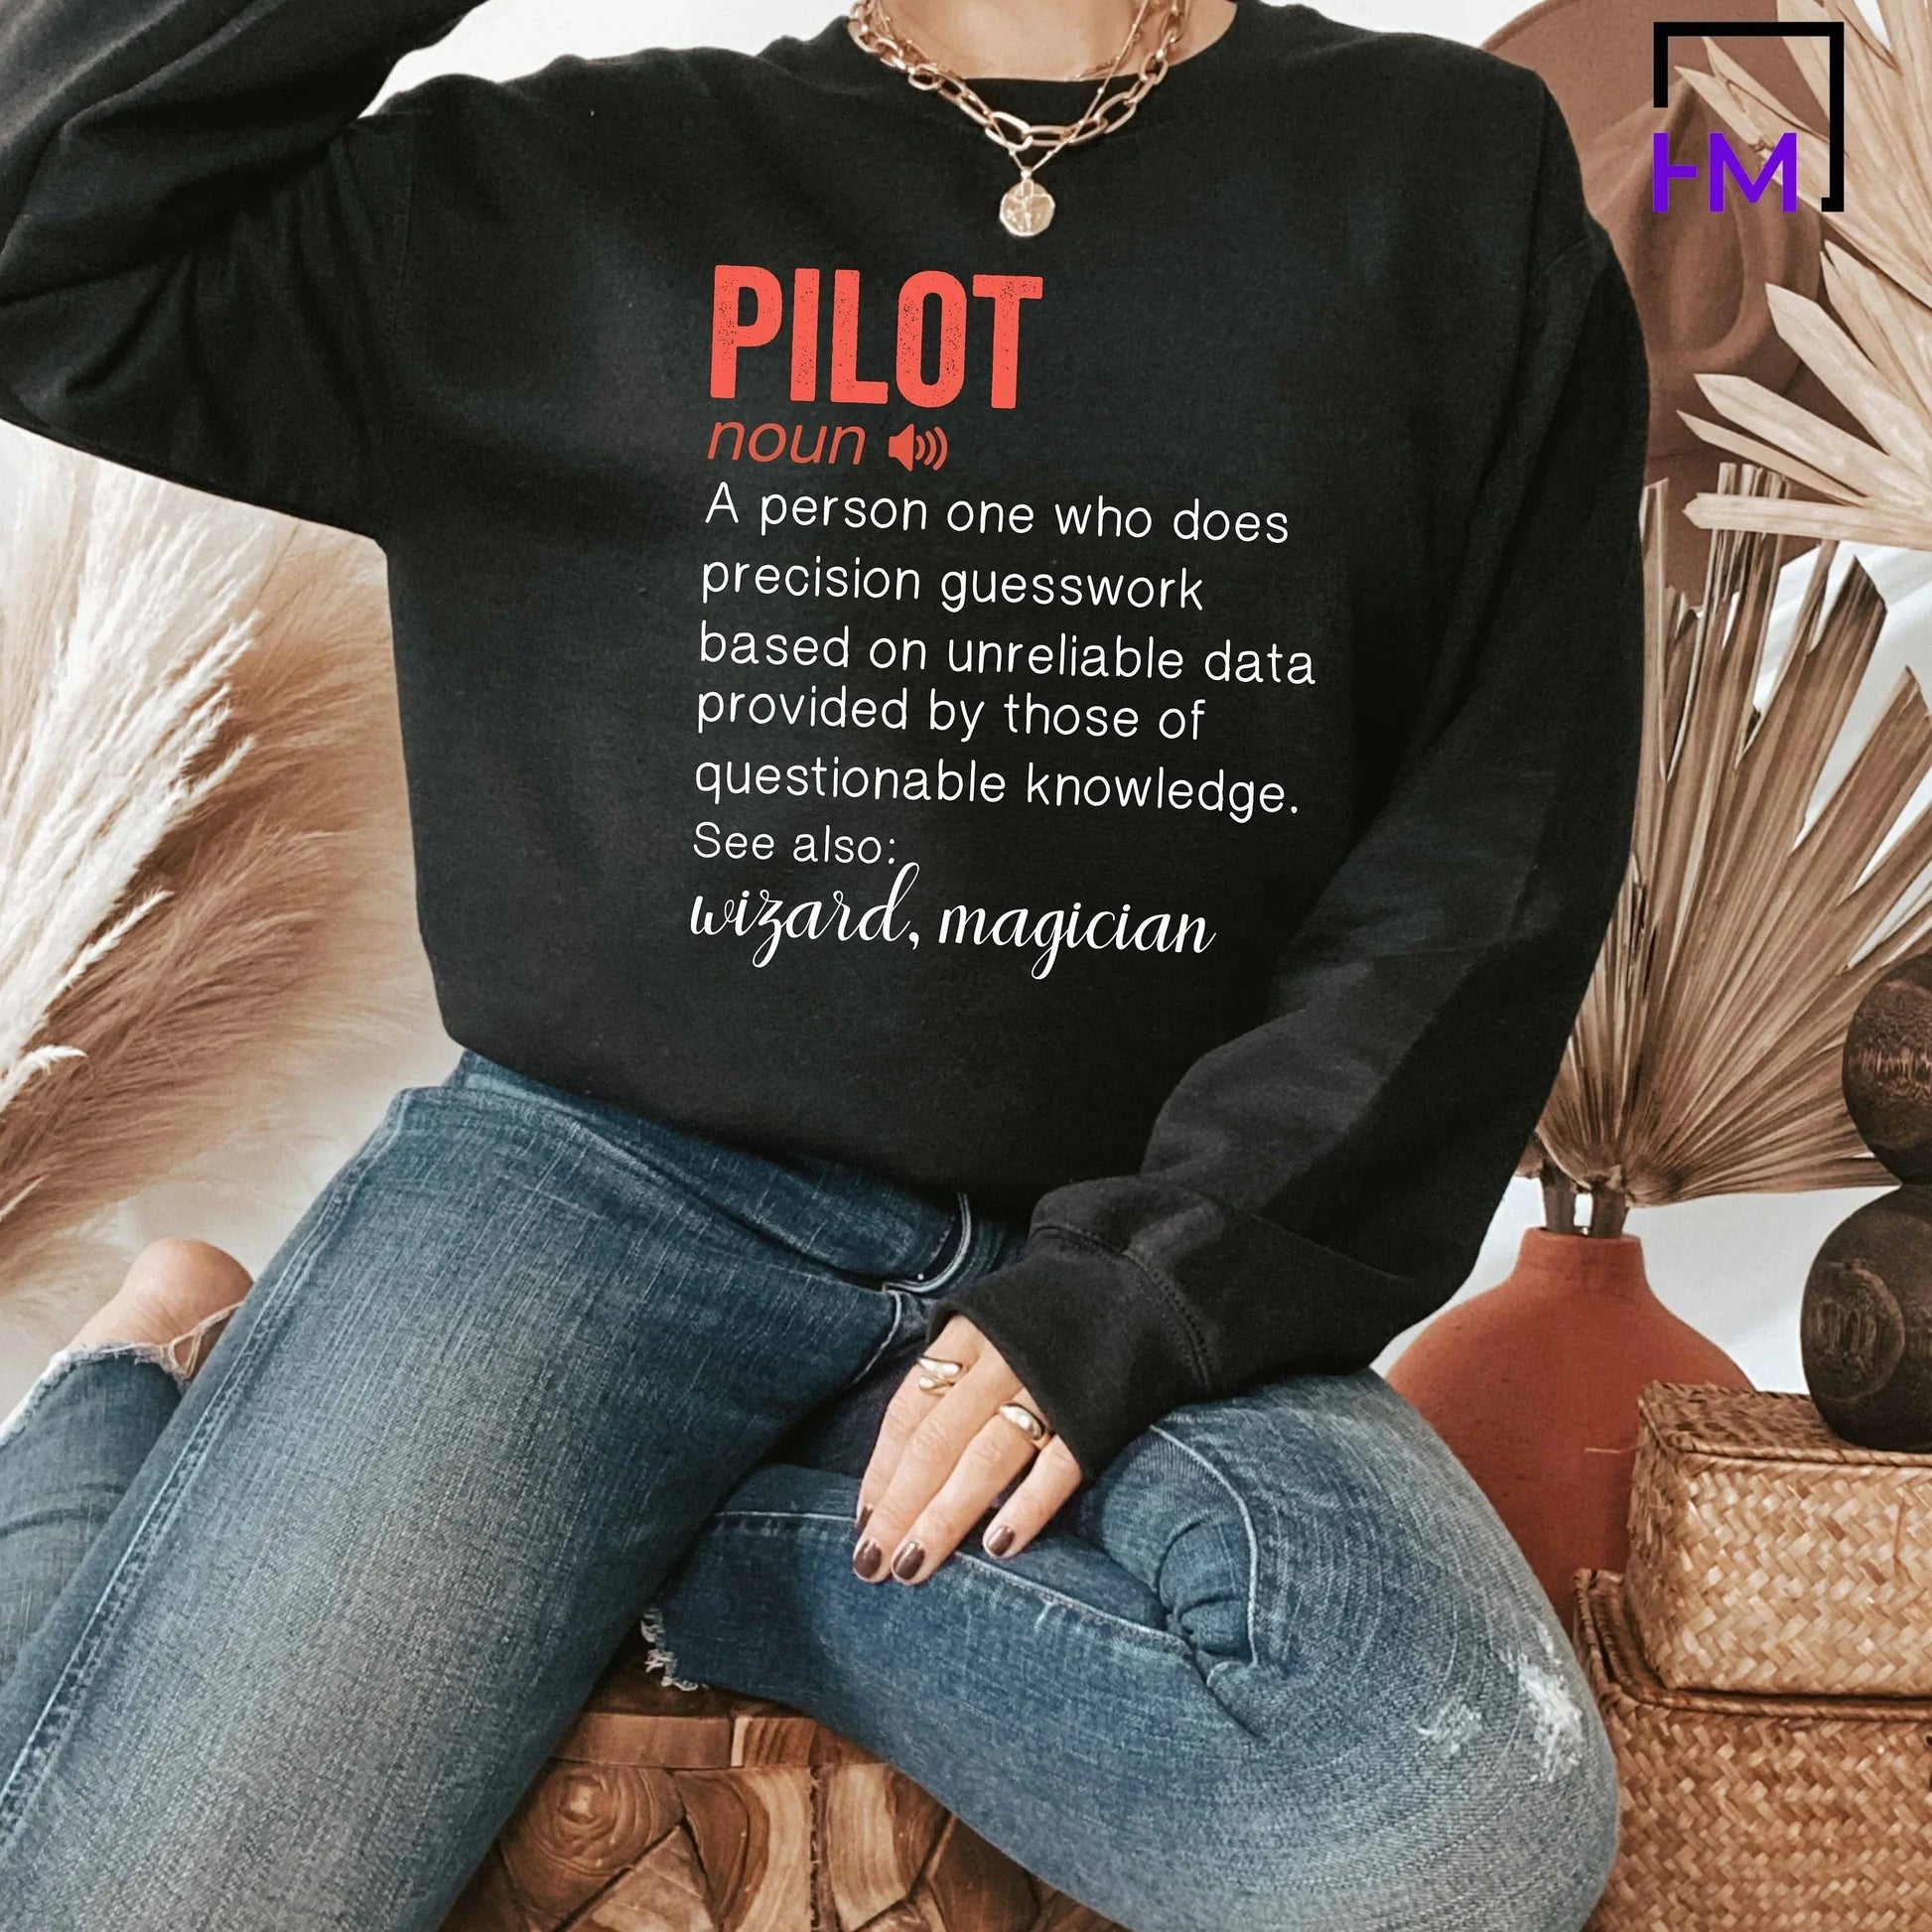 Funny Pilot Shirt, Airplane Mode Shirt, Aviation Graduate Student, Pilot Gift for Traveler, Adventurer Gift, Frequent Flyer Vacation Tee HMDesignStudioUS